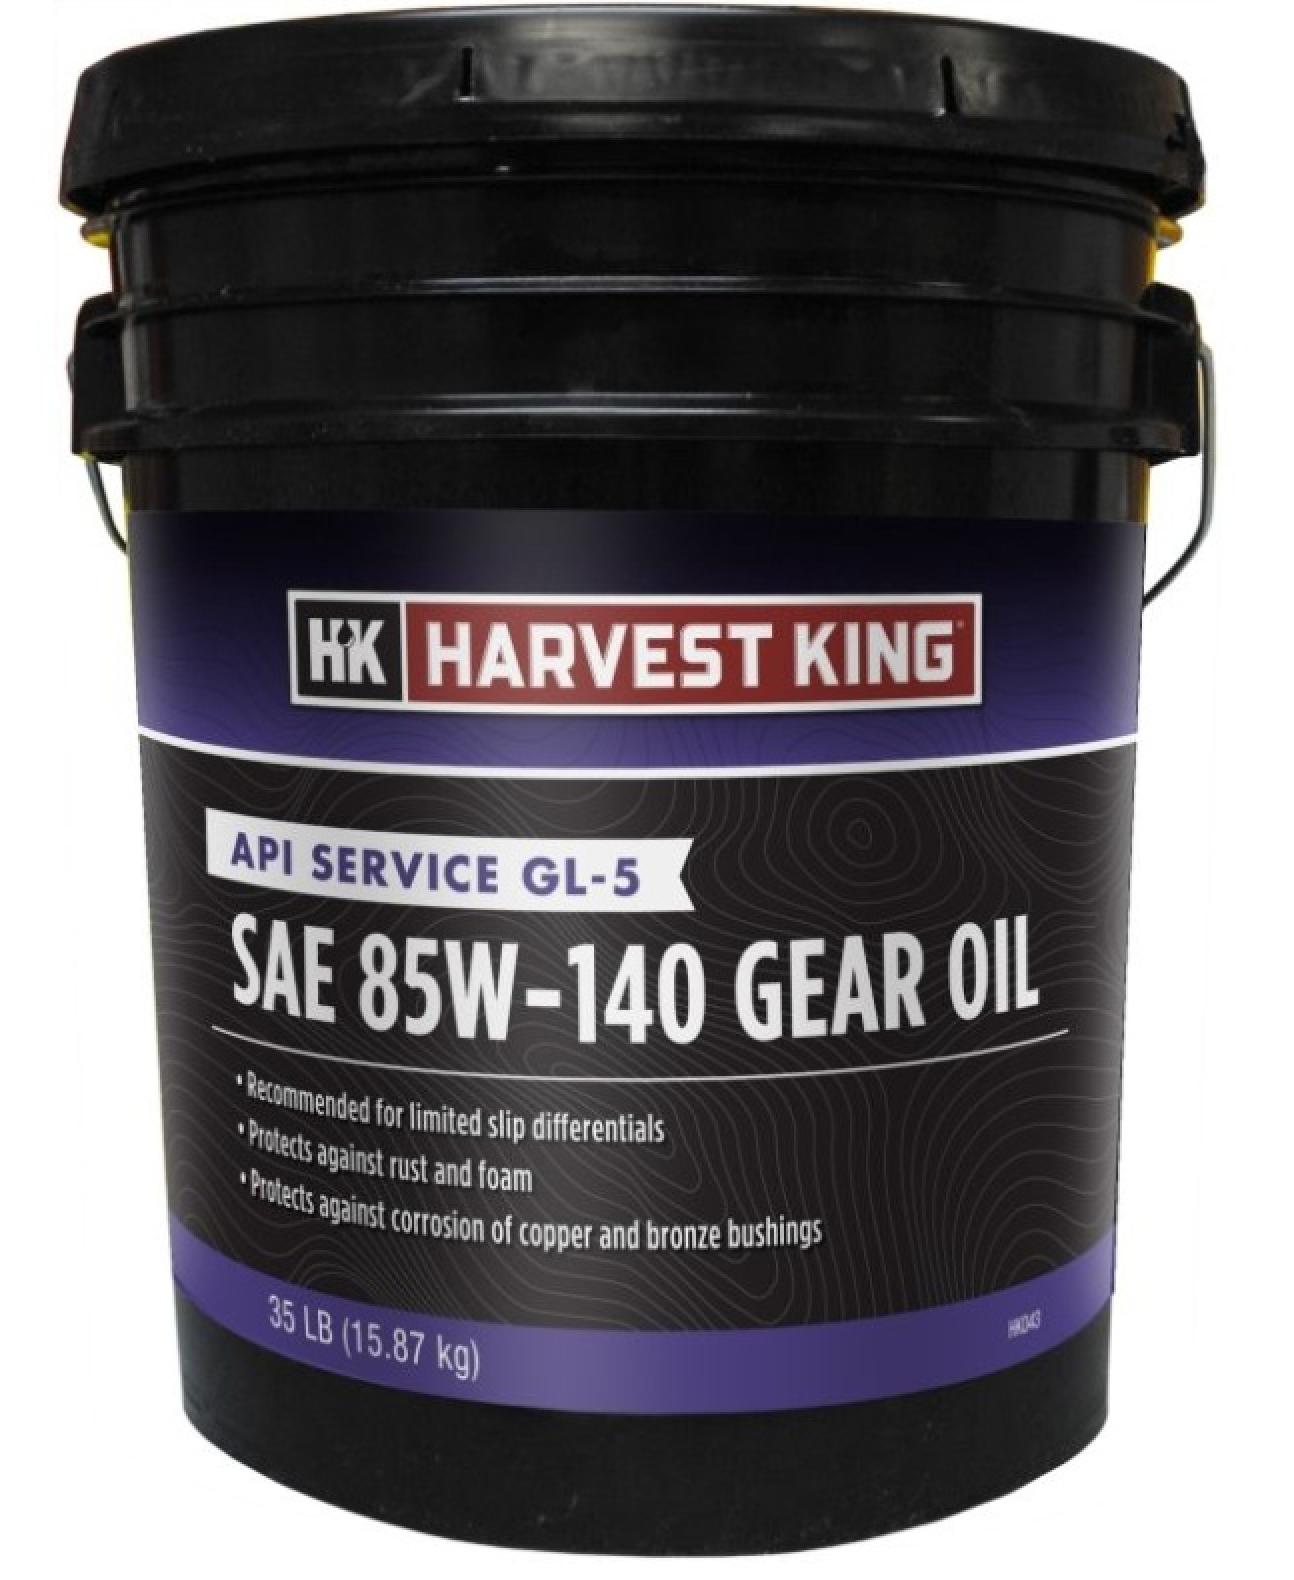 Harvest King API Service GL-5 SAE 85W-140 Gear Oil